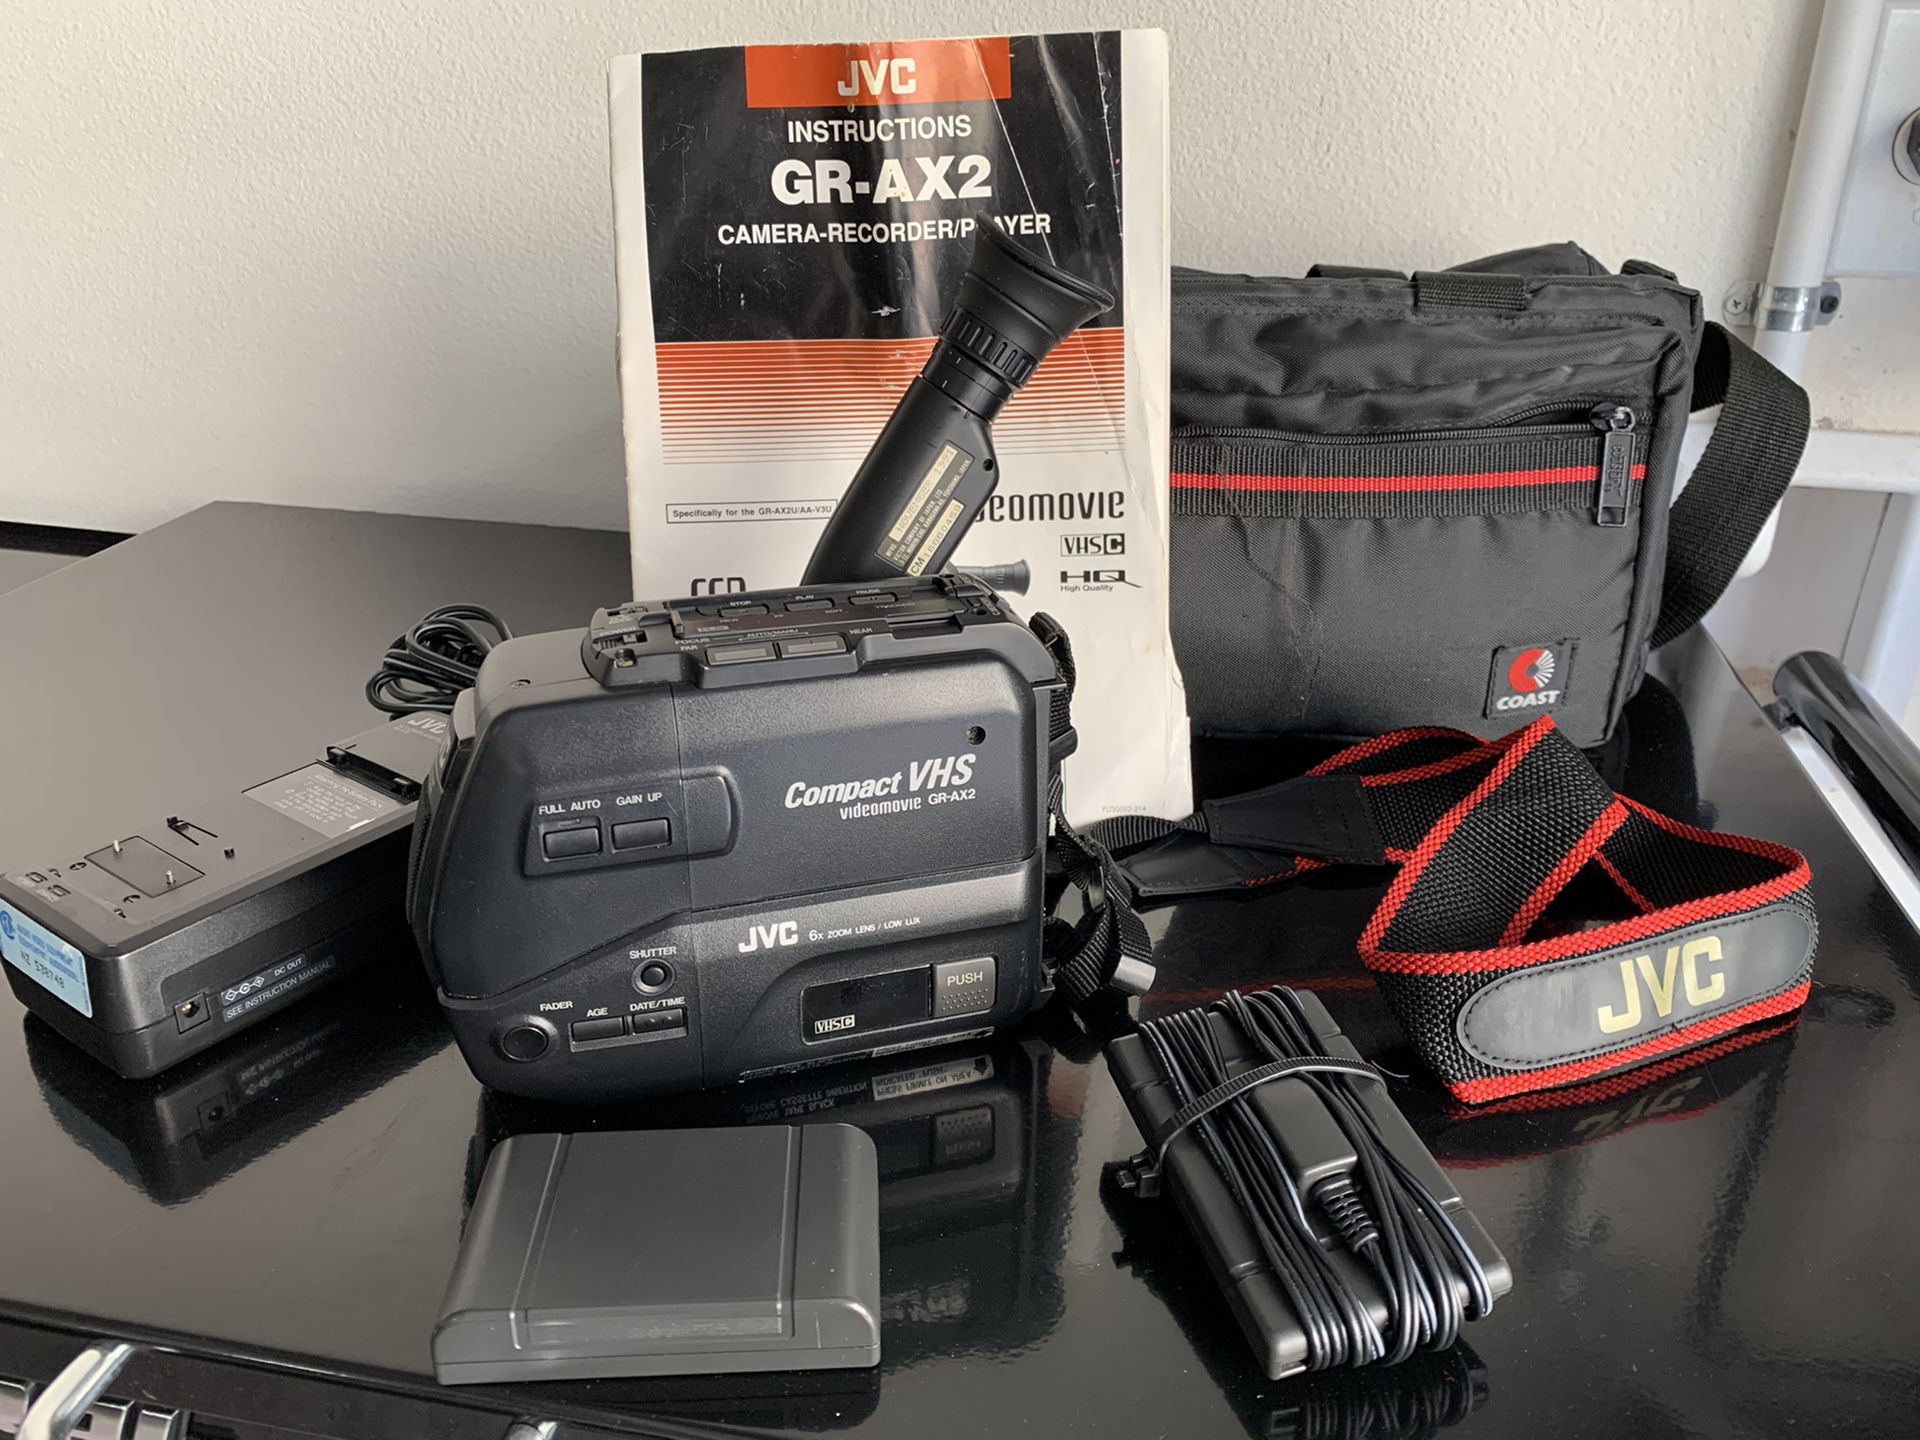 JVC GR-AX2 Compact VHS Video Camera Camcorder